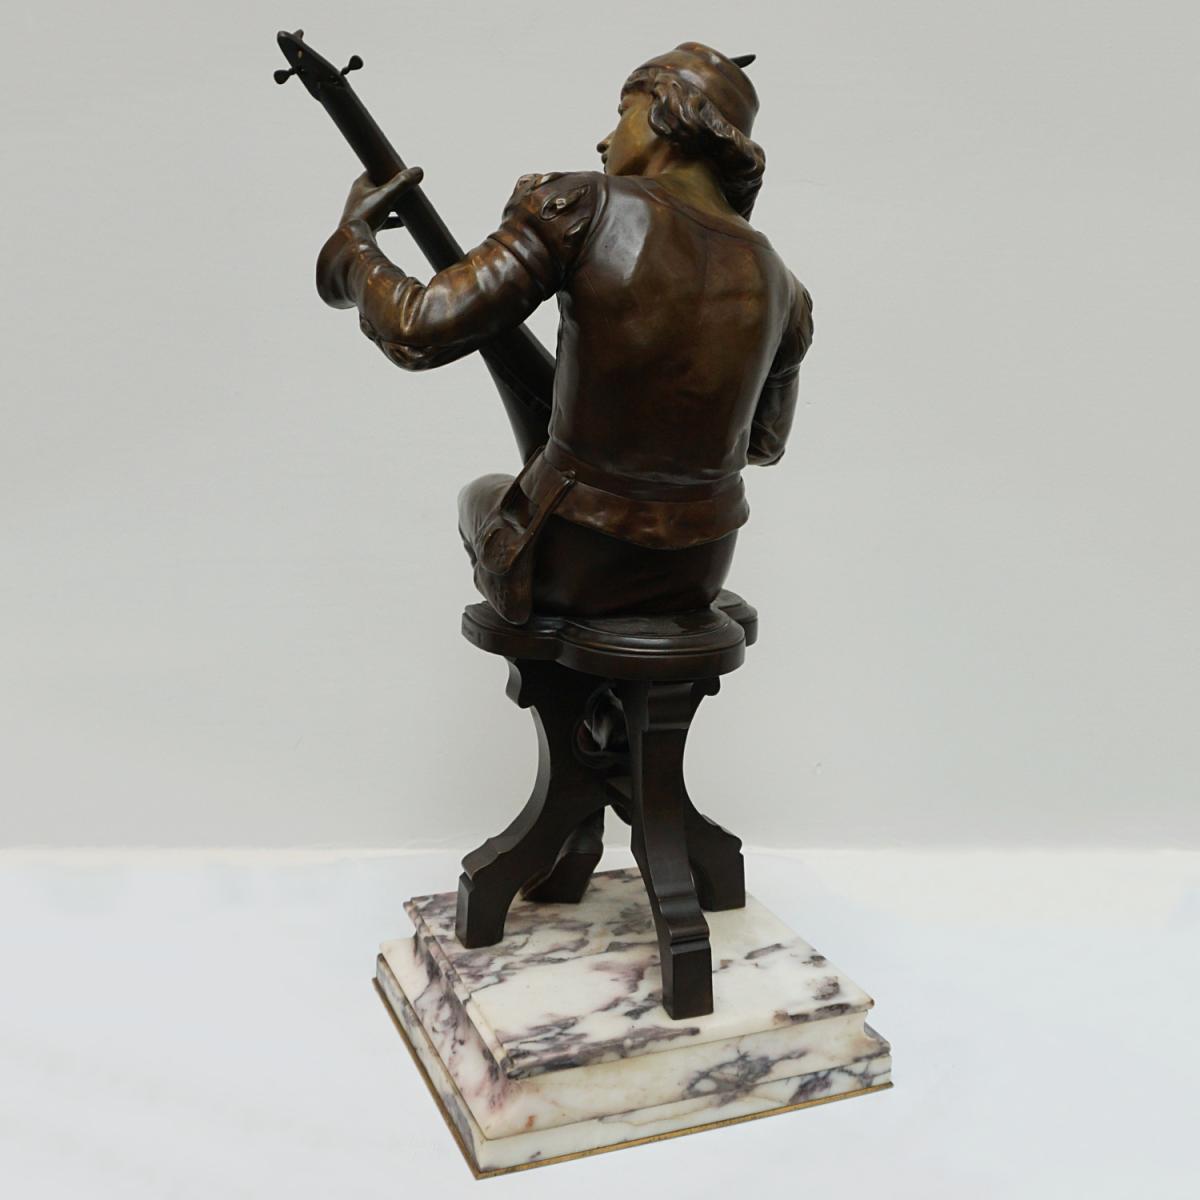 'Seated Minstrel' A late 19th century bronze sculpture by Emile Boisseau